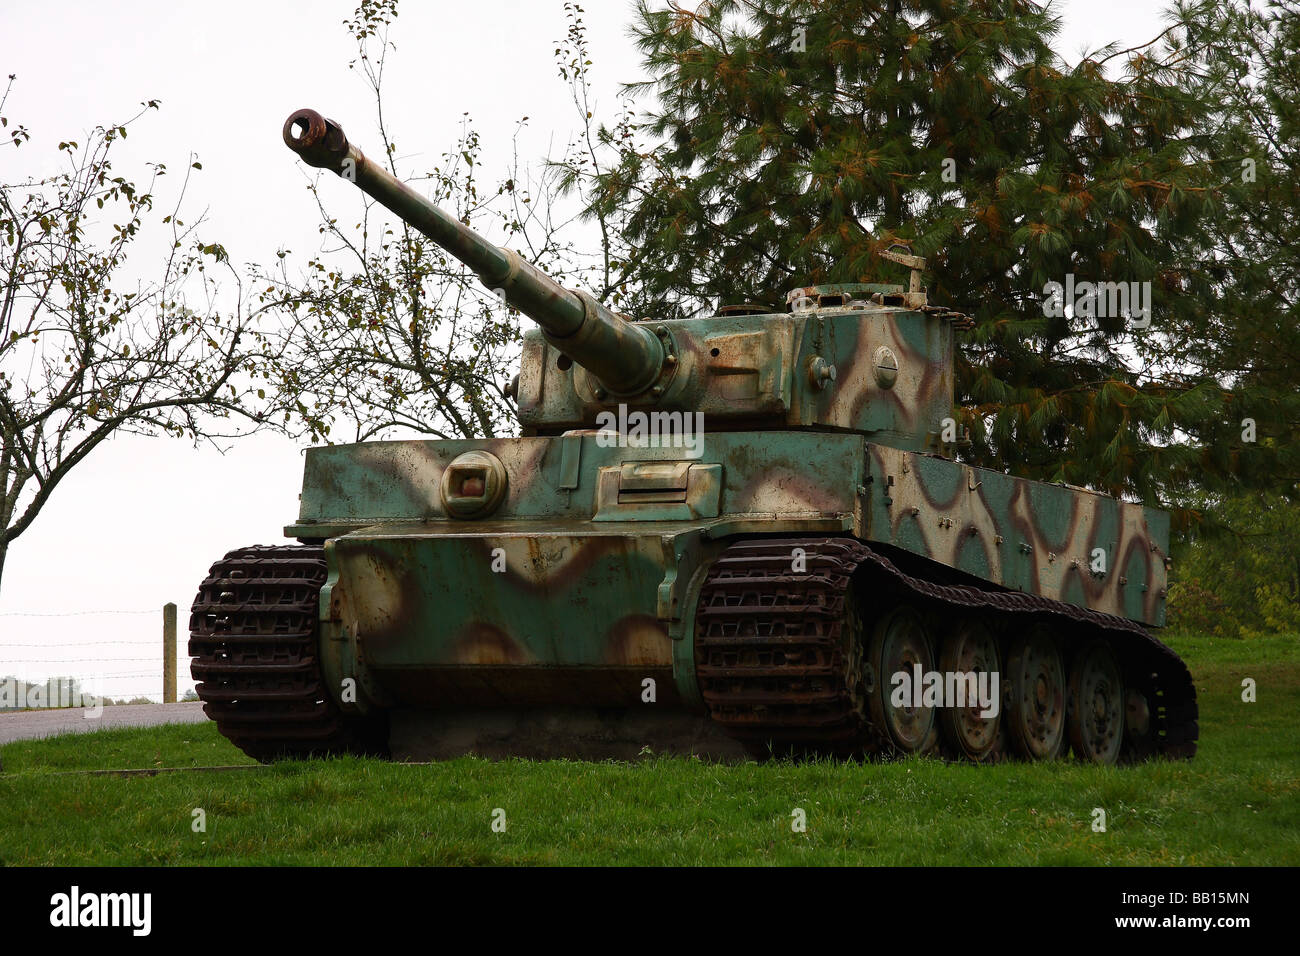 Tipo de tanque de tigre E número 231 en un zócalo de hormigón fuera de Vimoutiers Normandía Francia Foto de stock